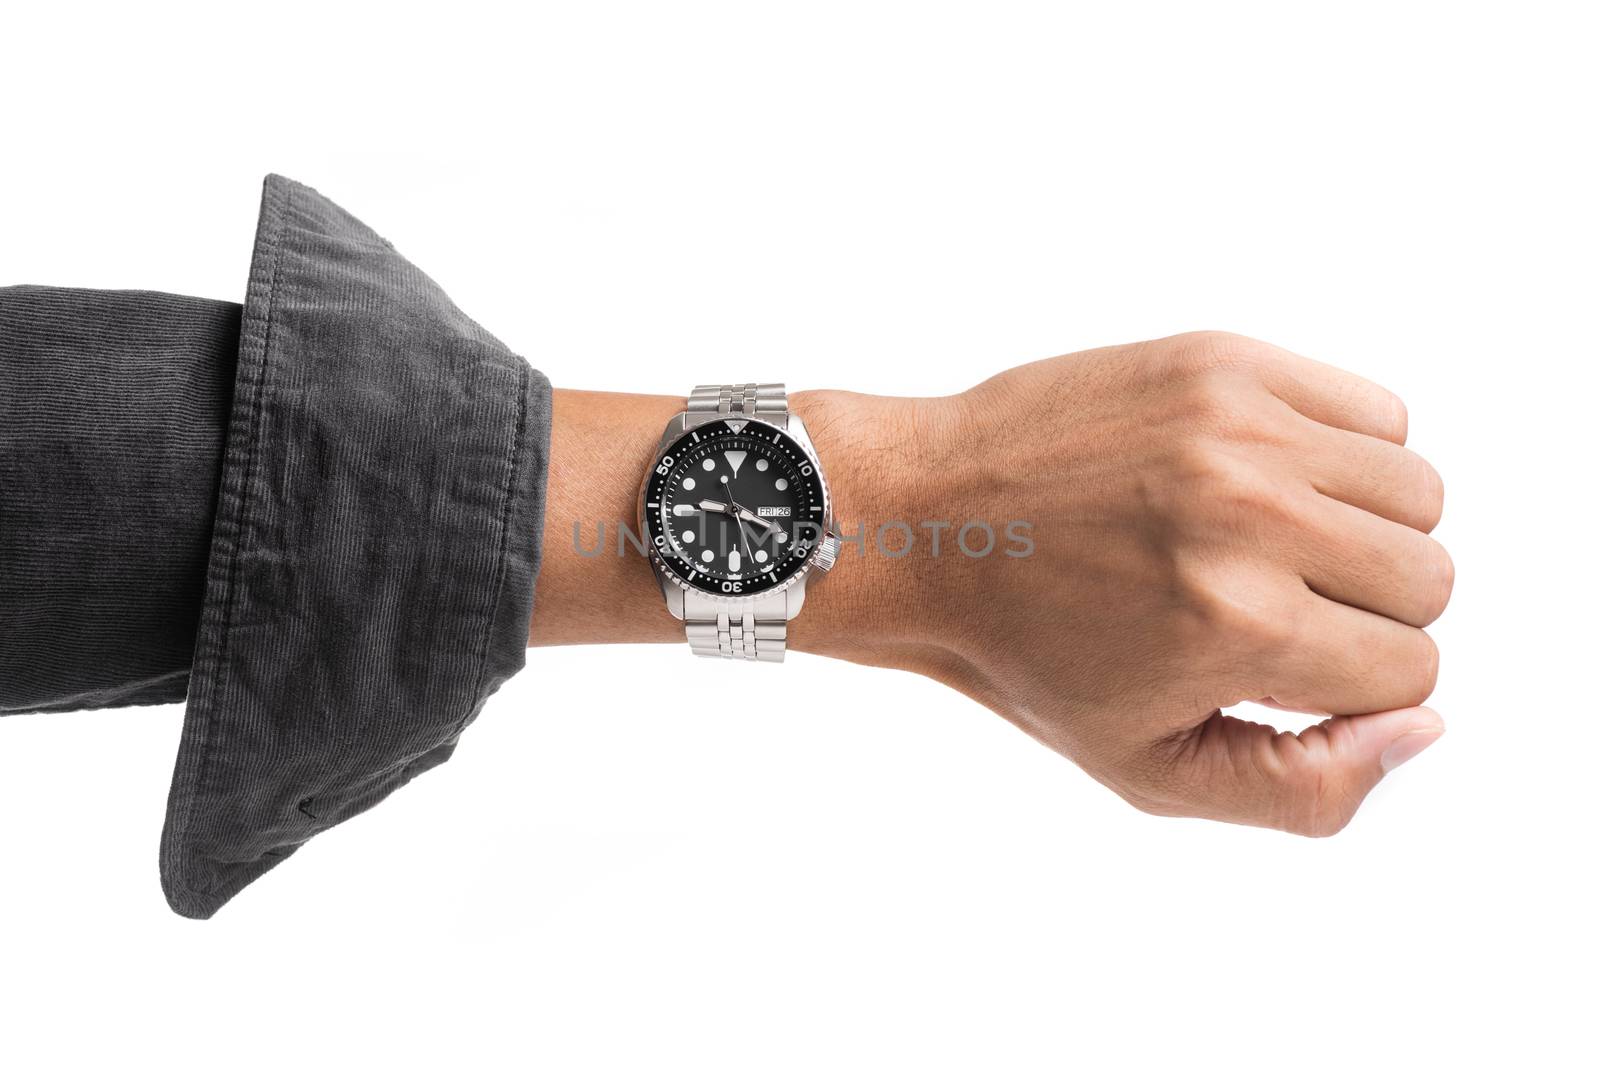 luxury watch on man's wrist over white background